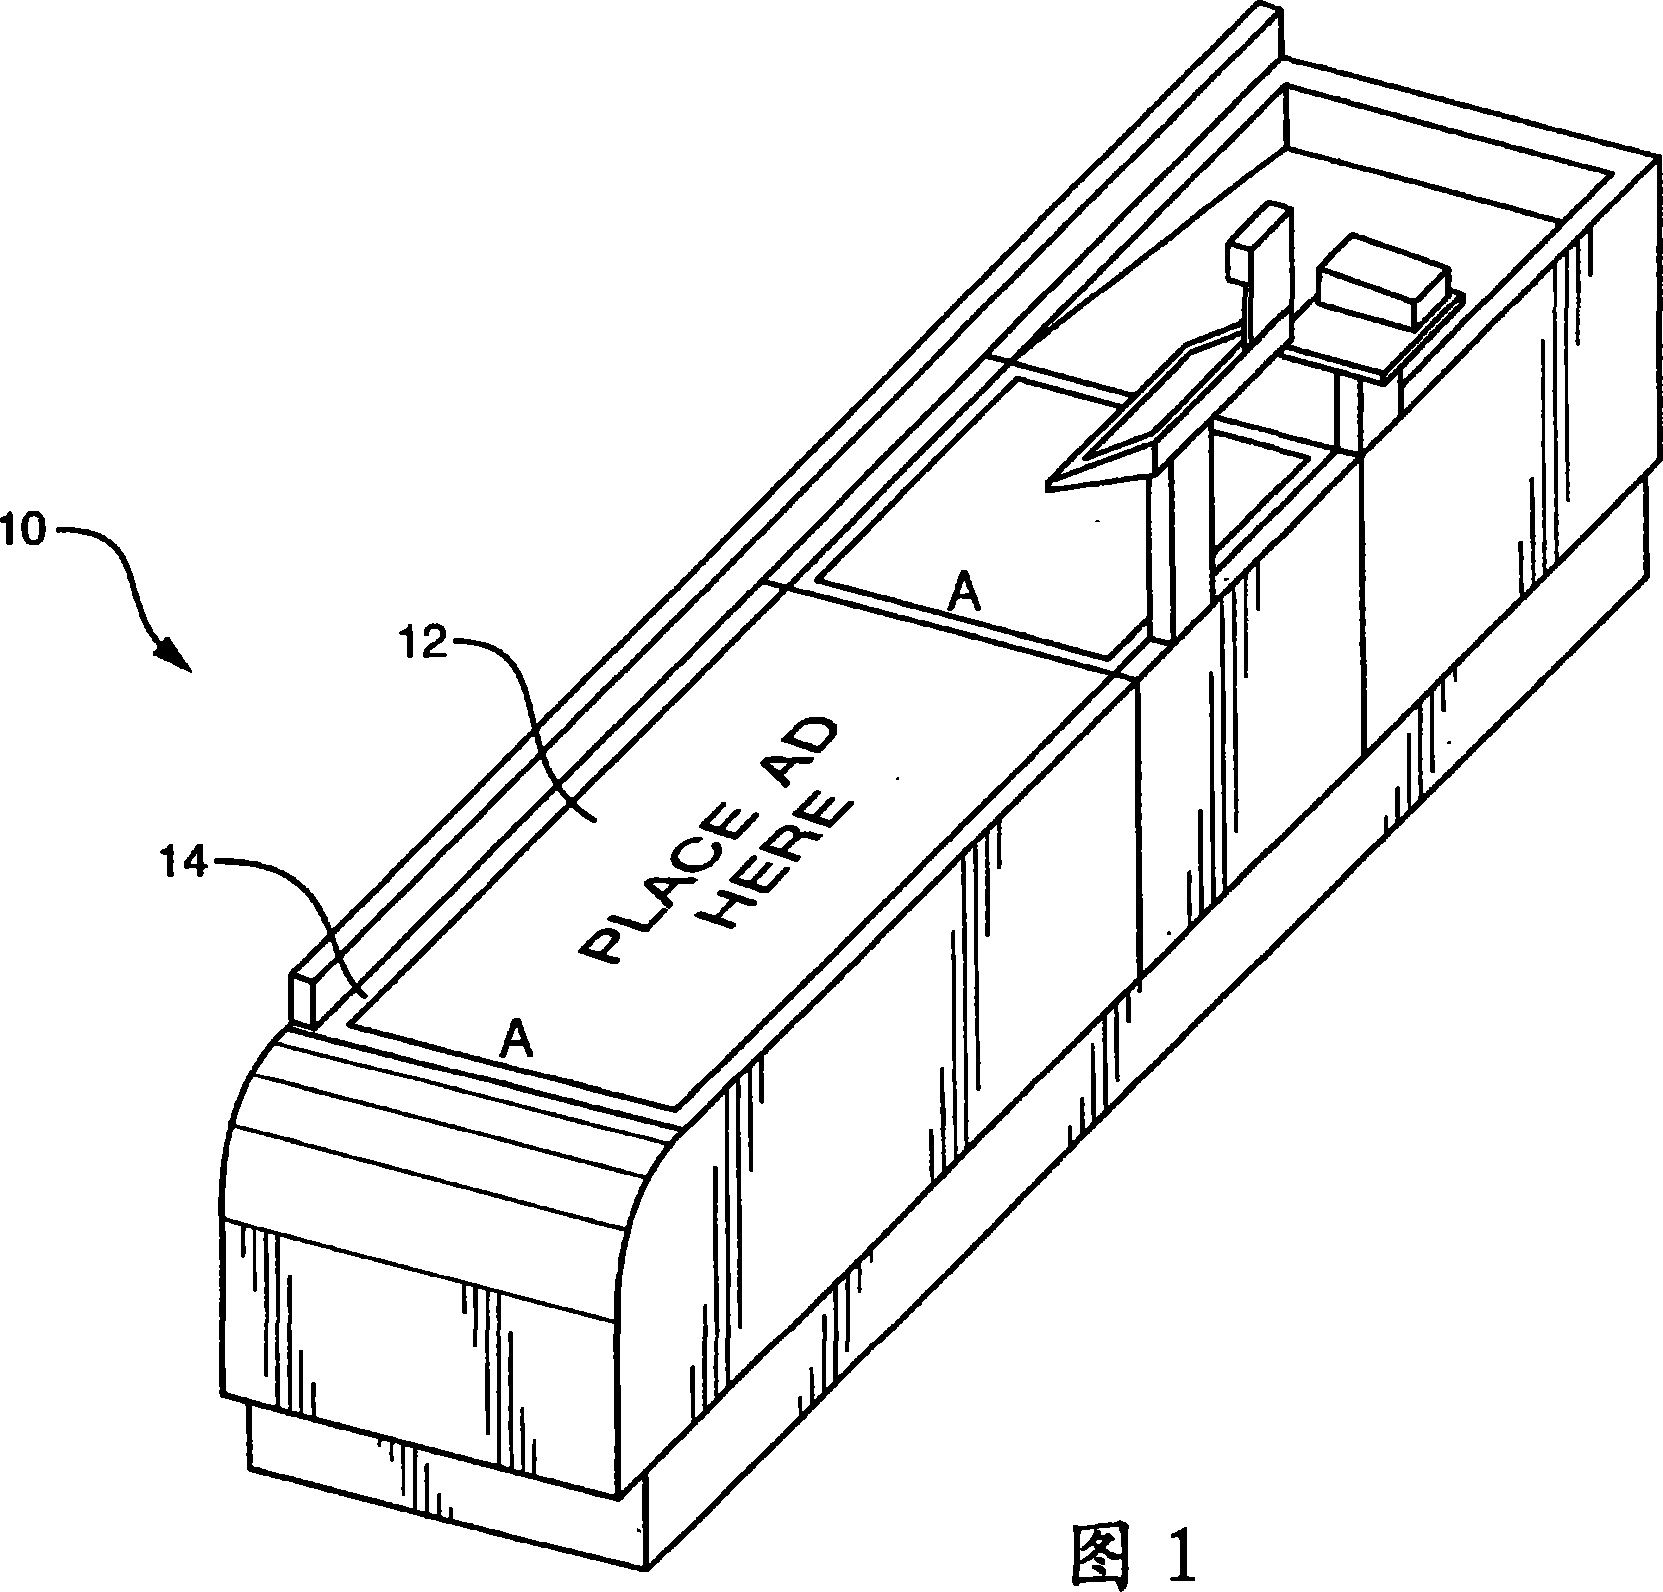 Conveyor belt cover